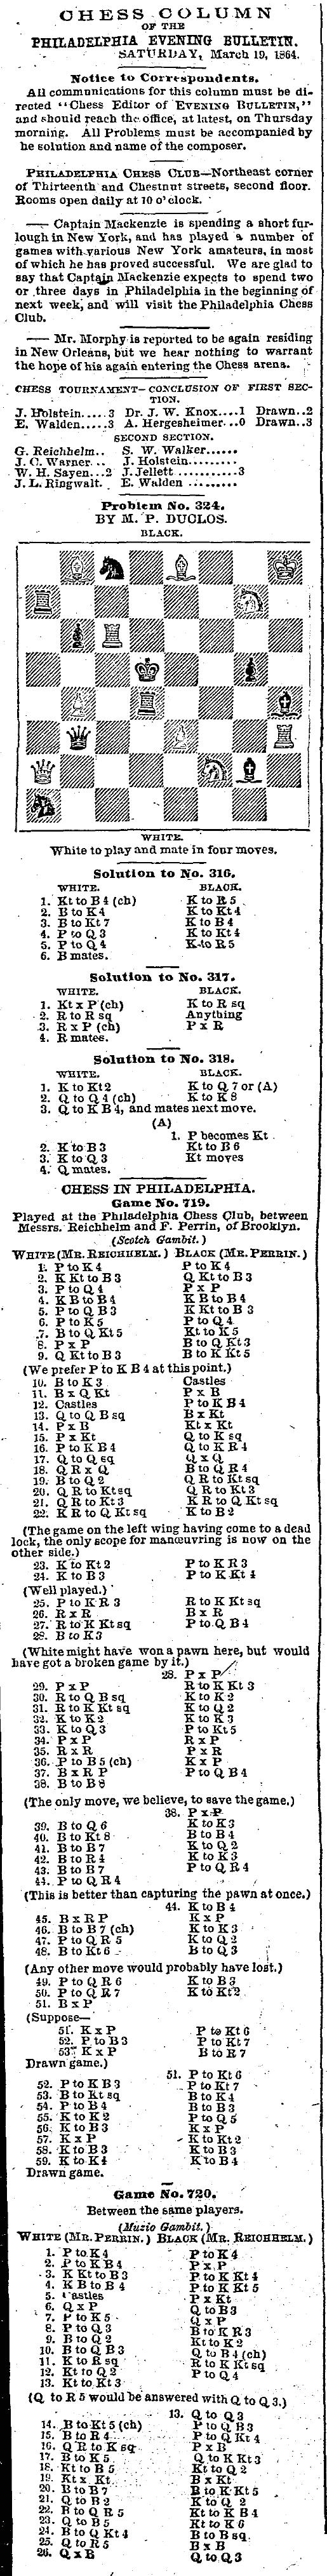 1864.03.19-01 Philadelphia Daily Evening Bulletin.jpg